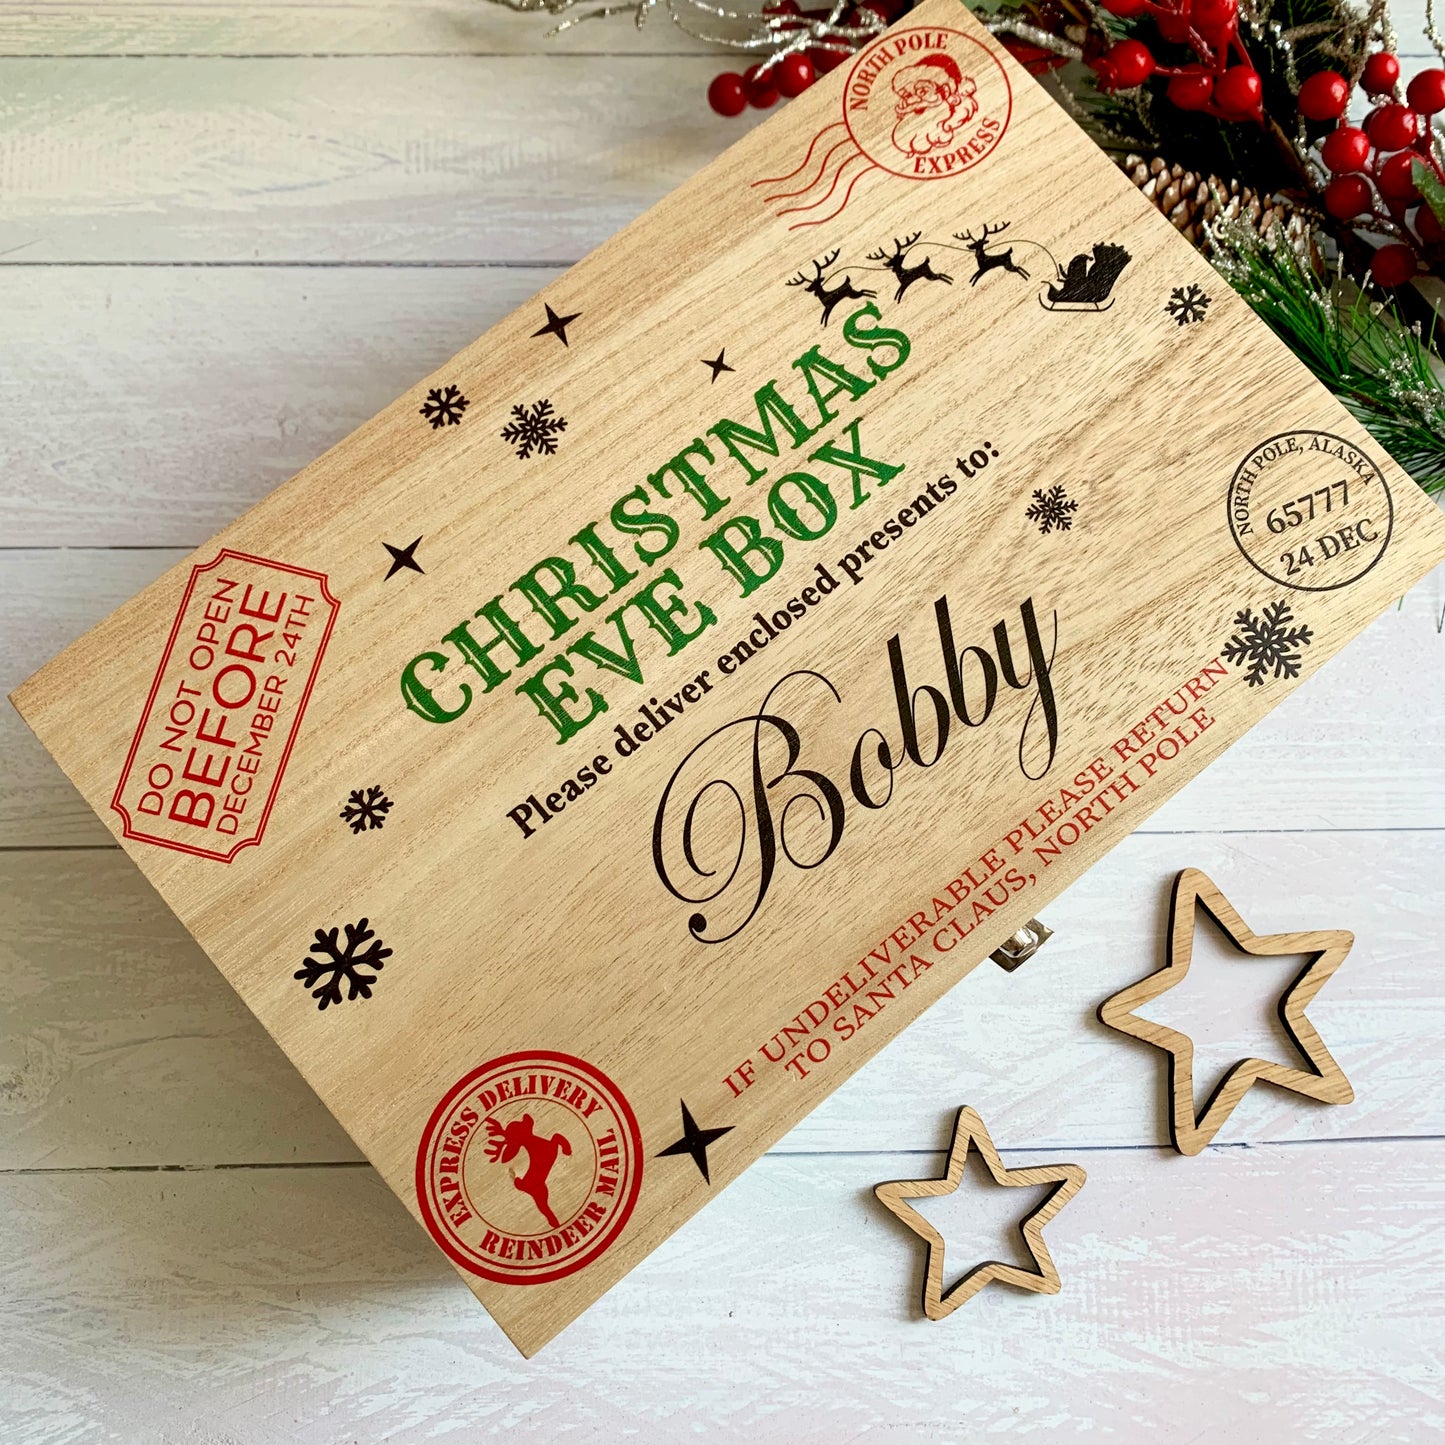 Christmas Eve Box, personalised festive wooden box